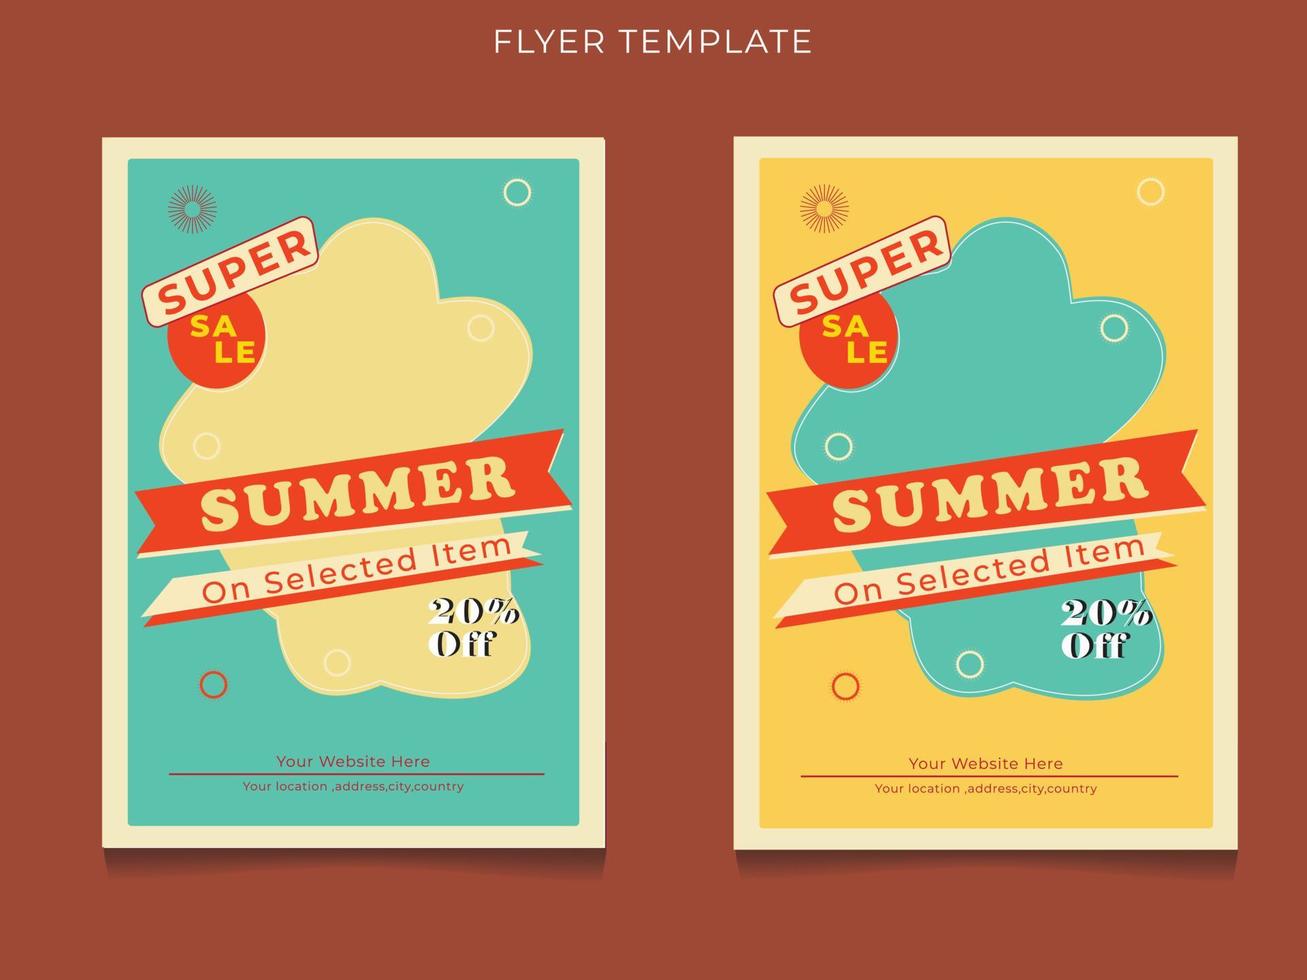 Retro style summer sale flyer template design in vector illustration.